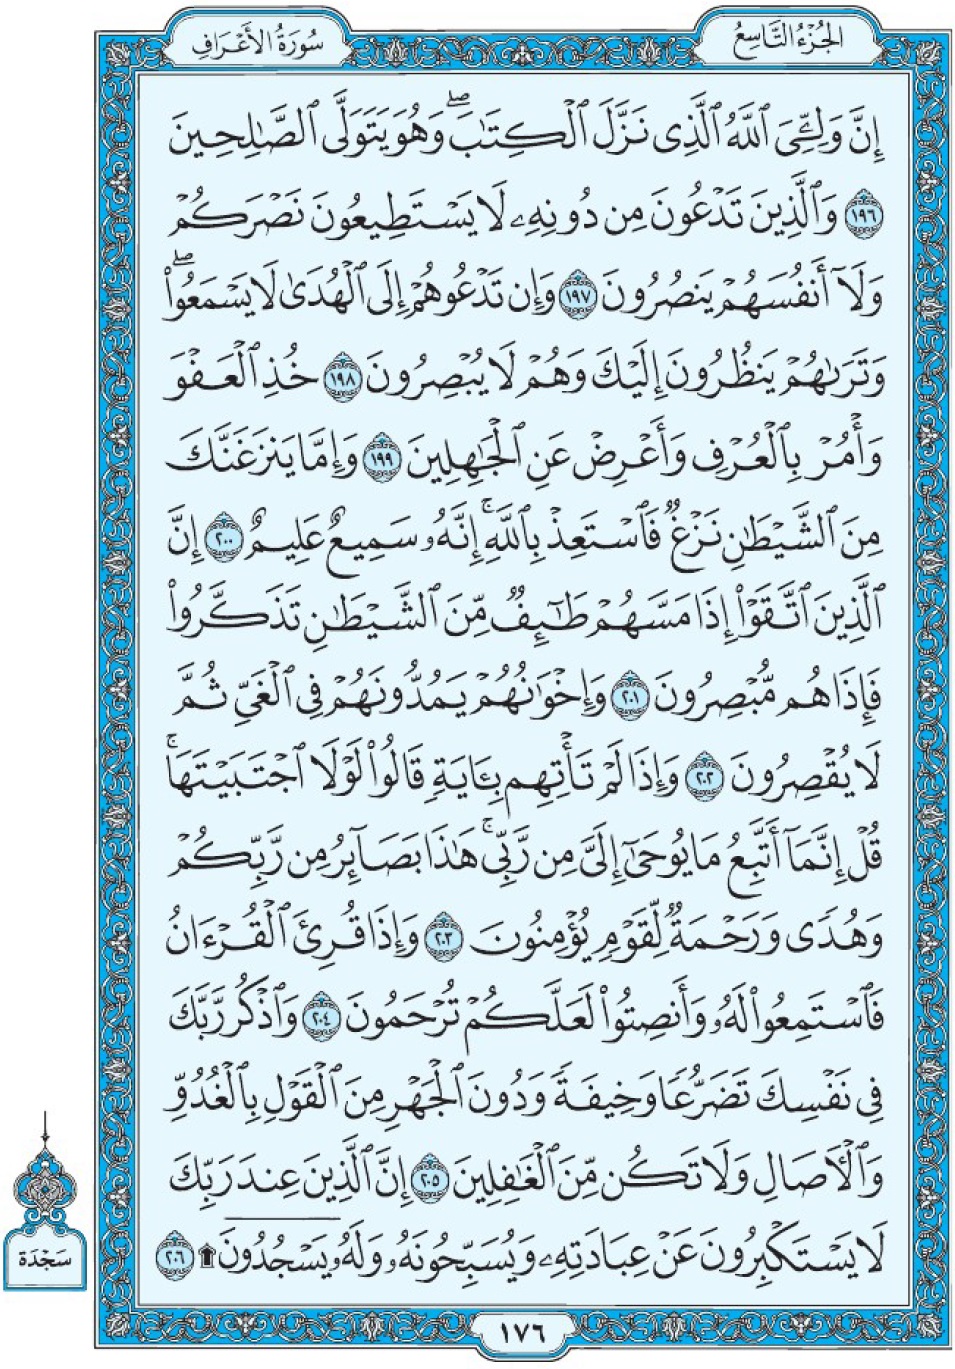 Коран Мединский мусхаф страница 176, Аль-А‘раф, аят 196-206